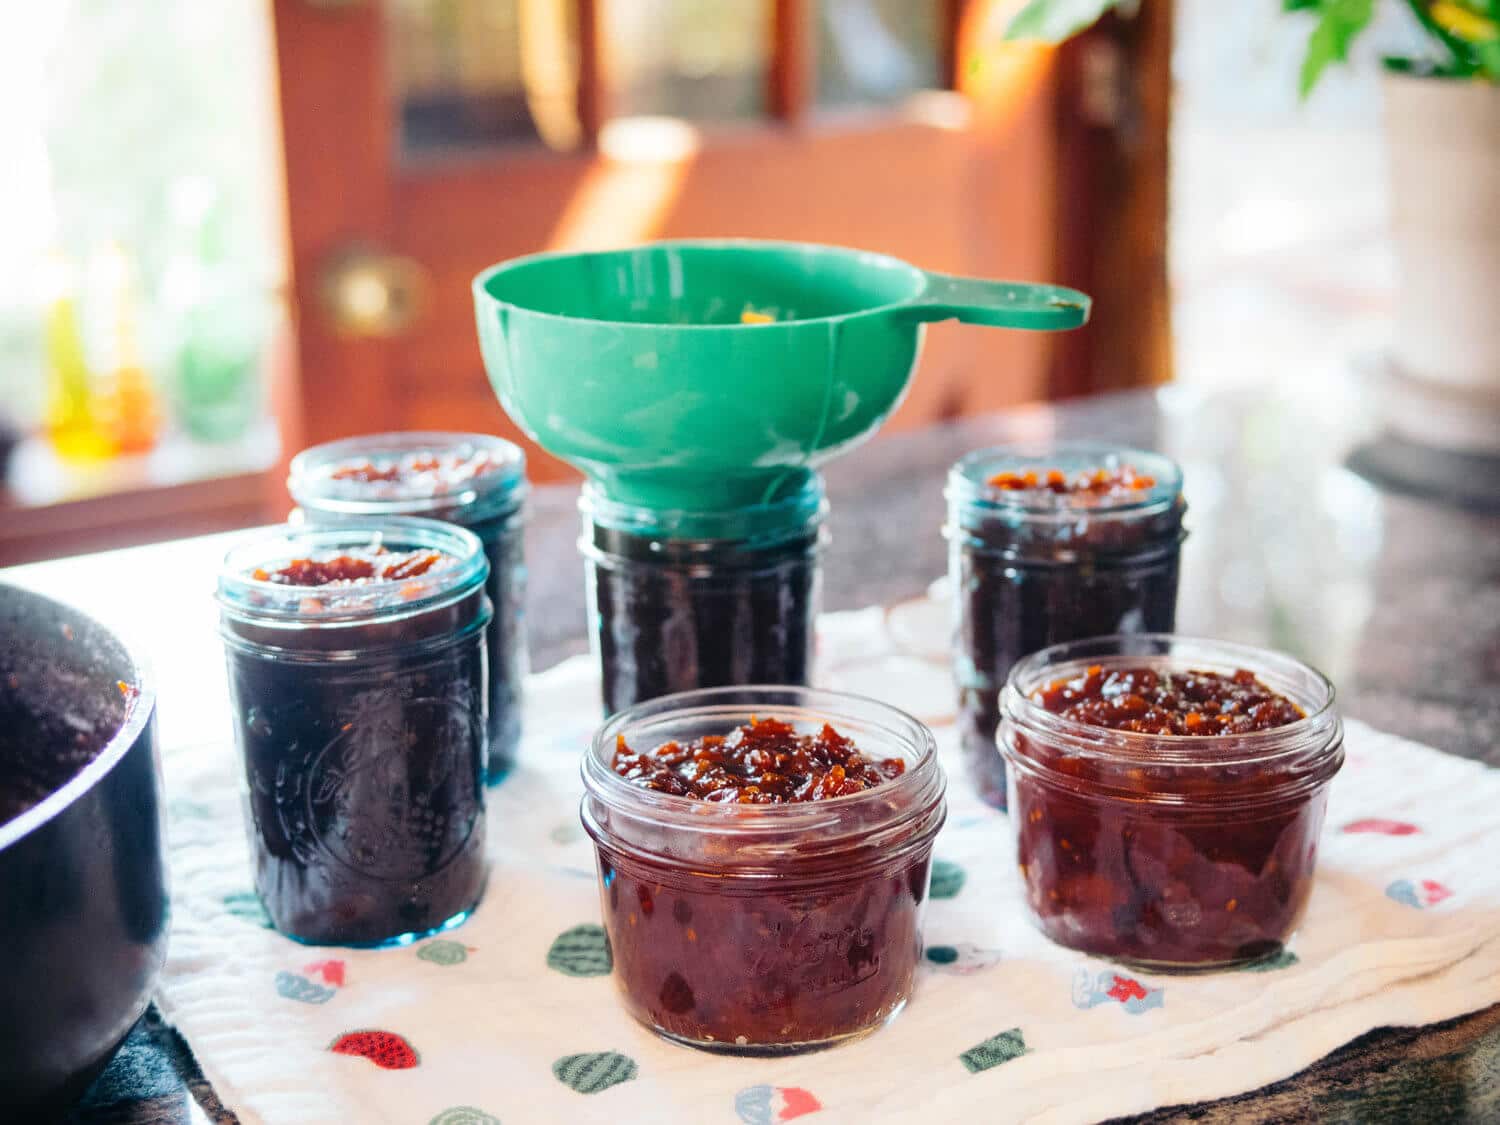 Ladle the jam into the prepared jars